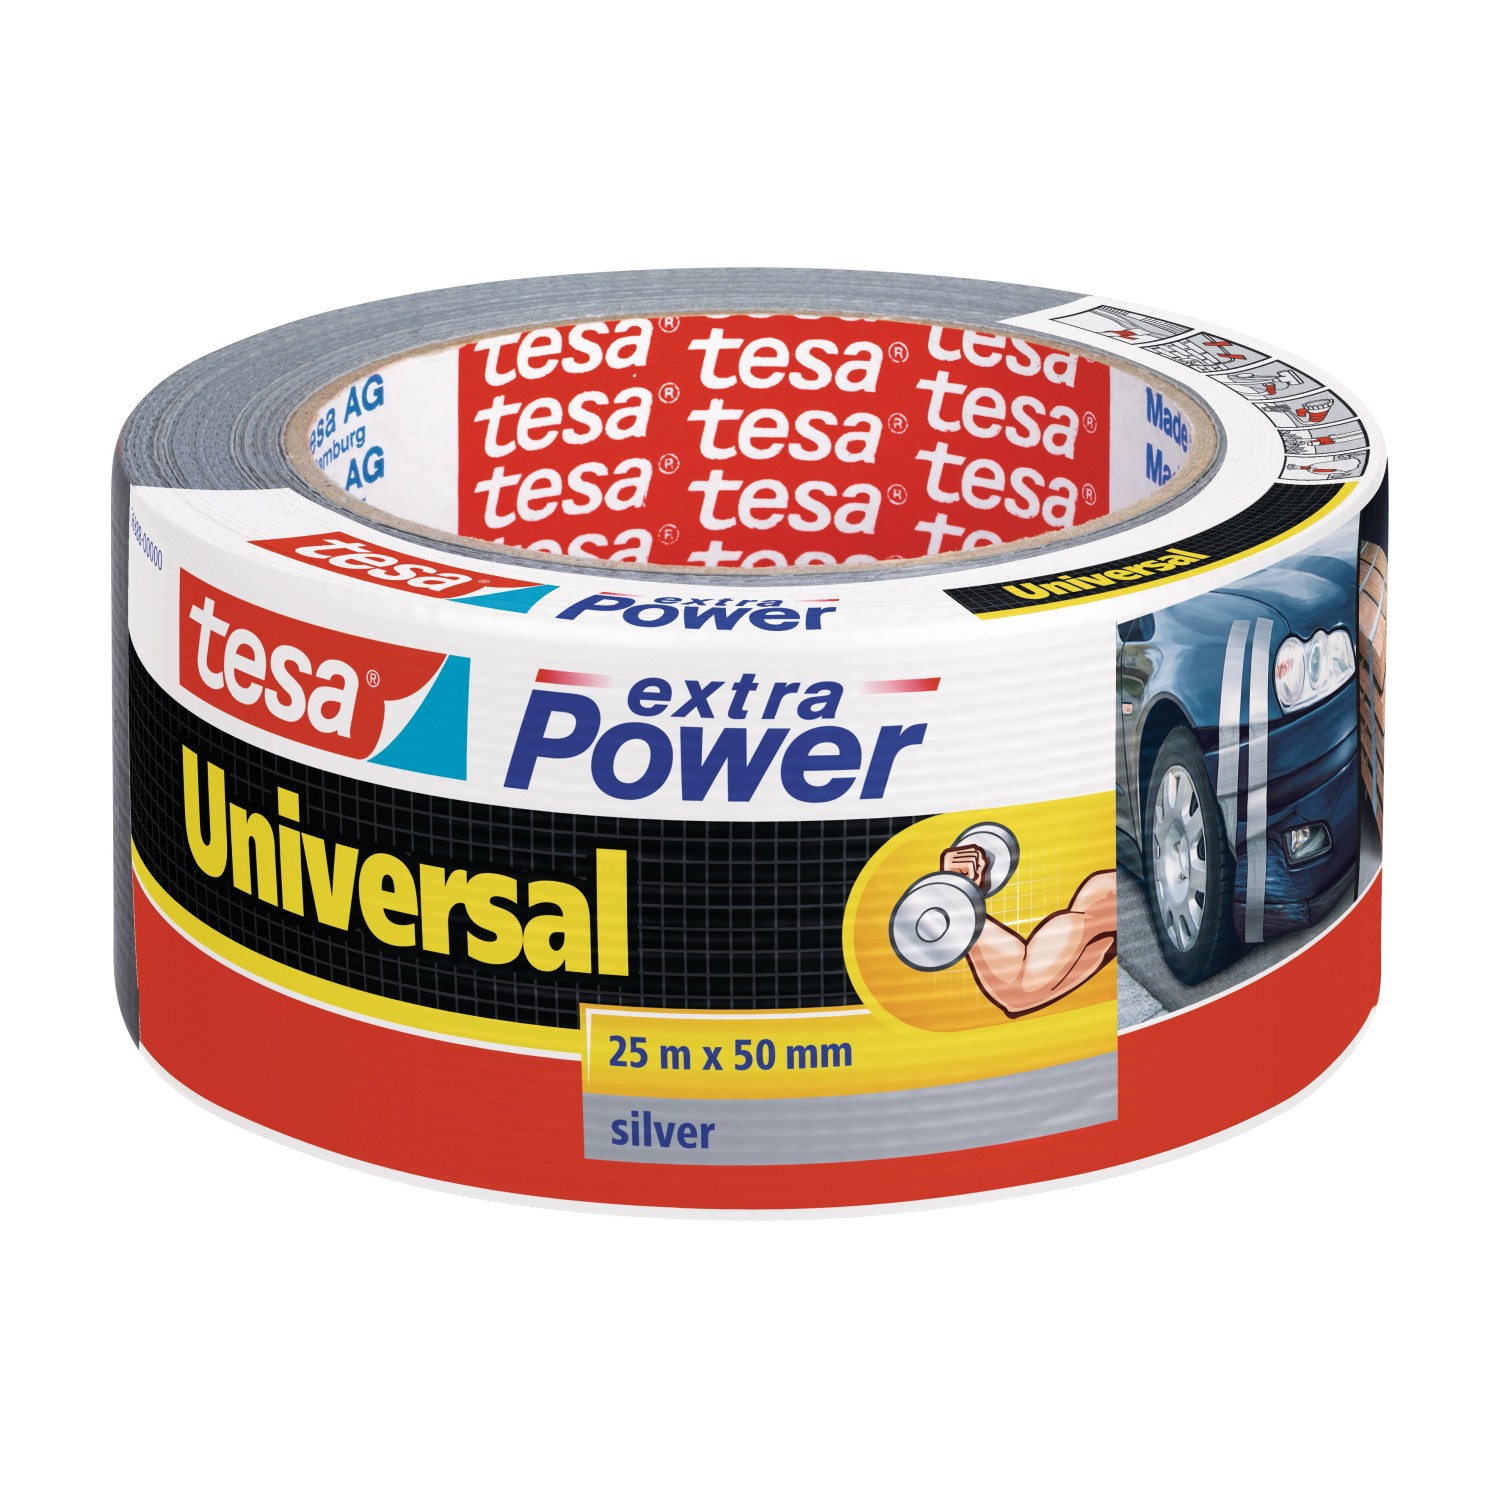 Tesa Extra Power Universal Silber 25 m x 50 mm